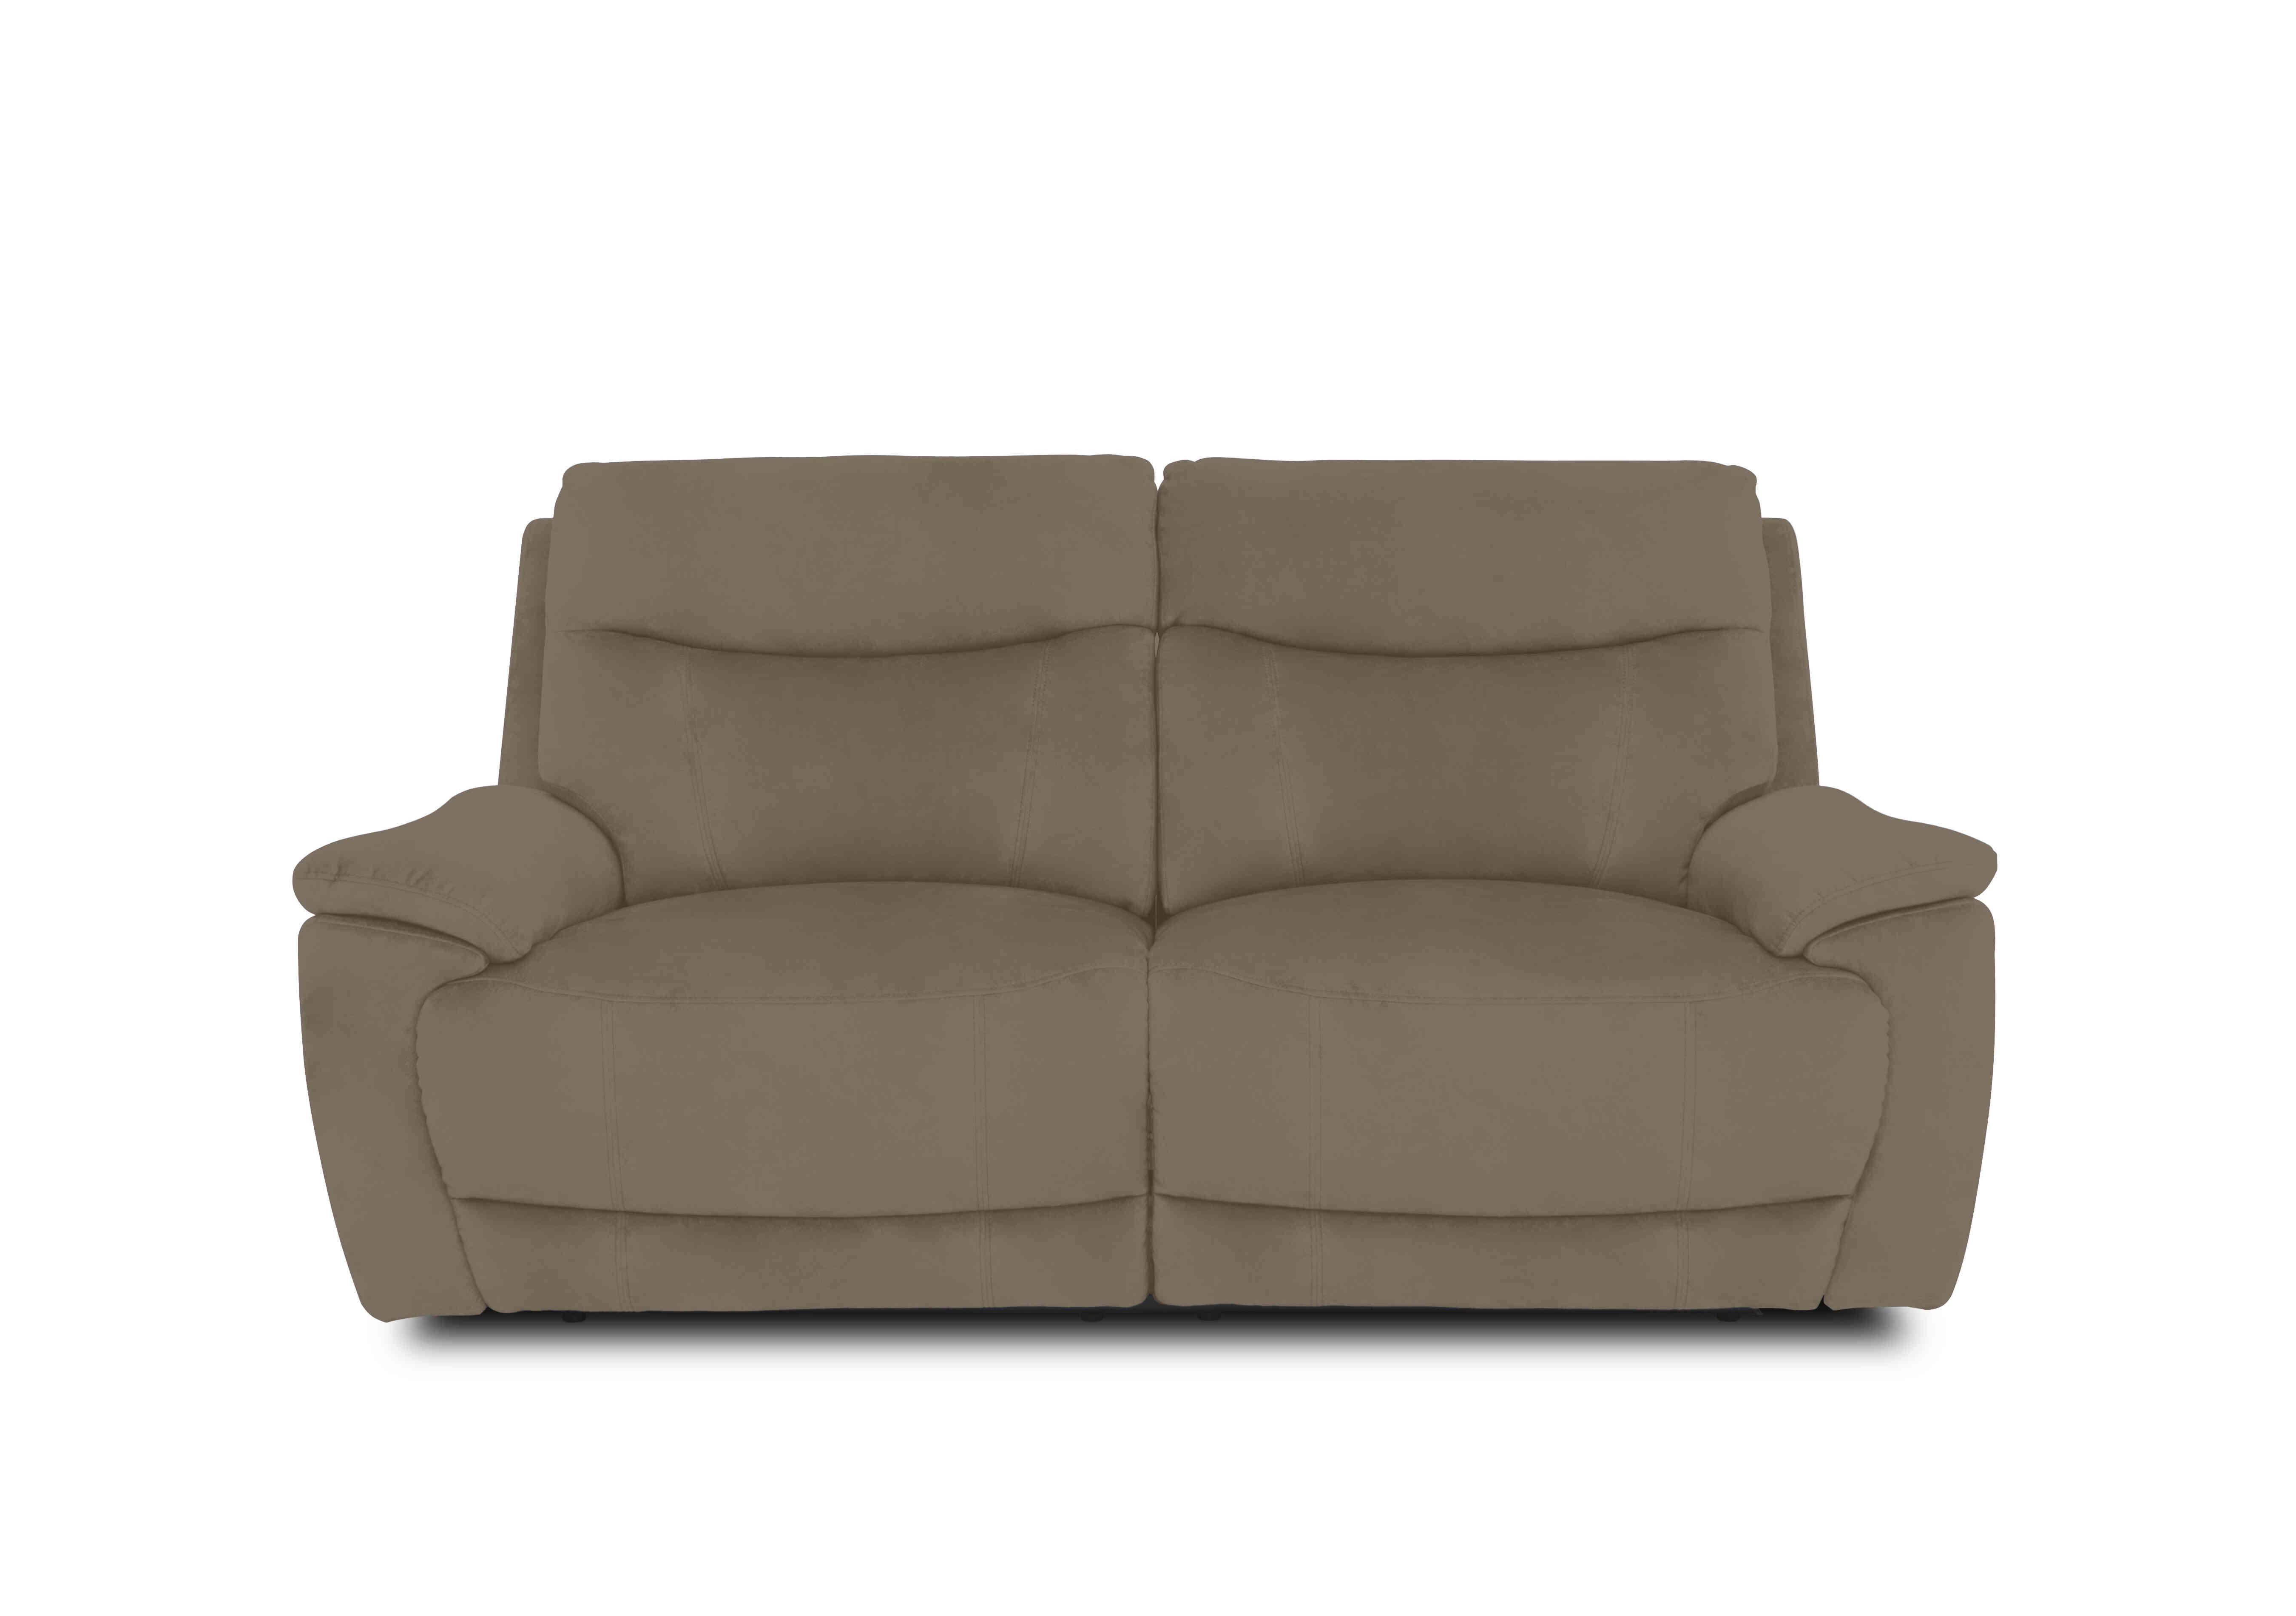 Sloane 3 Seater Fabric Sofa in 51014 Opulence Cedar on Furniture Village